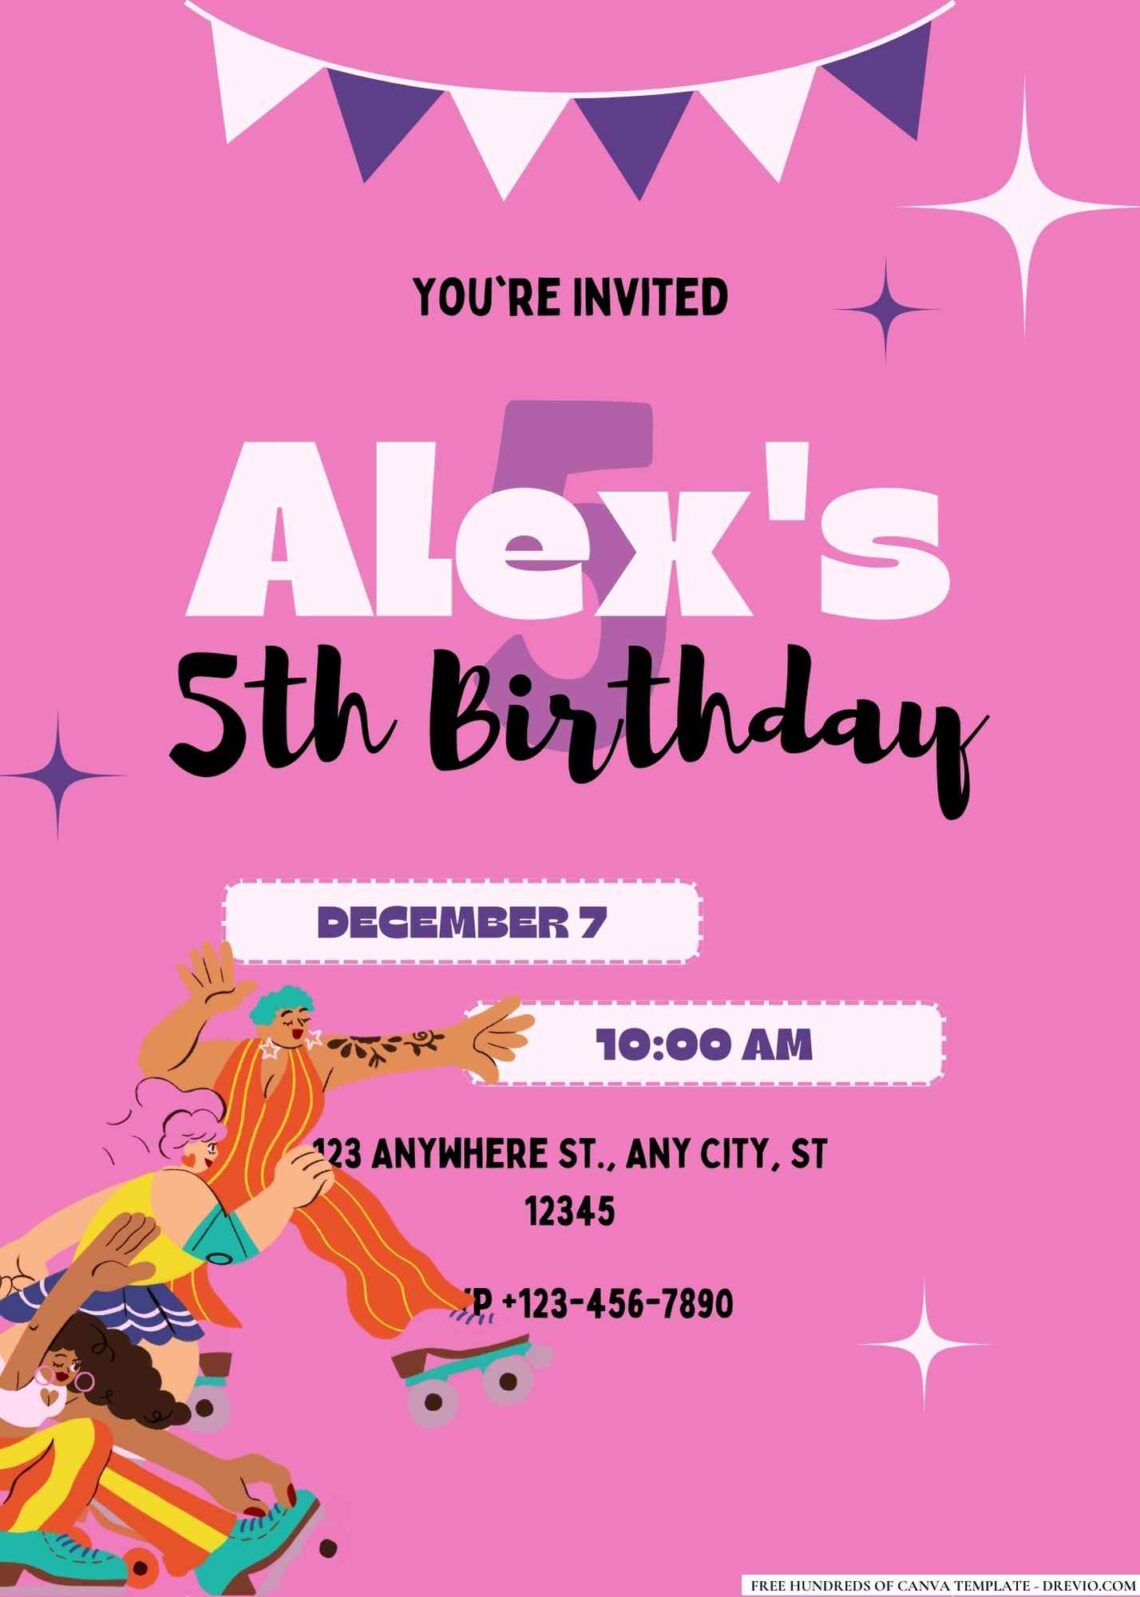 FREE Roller Skating Birthday Invitations